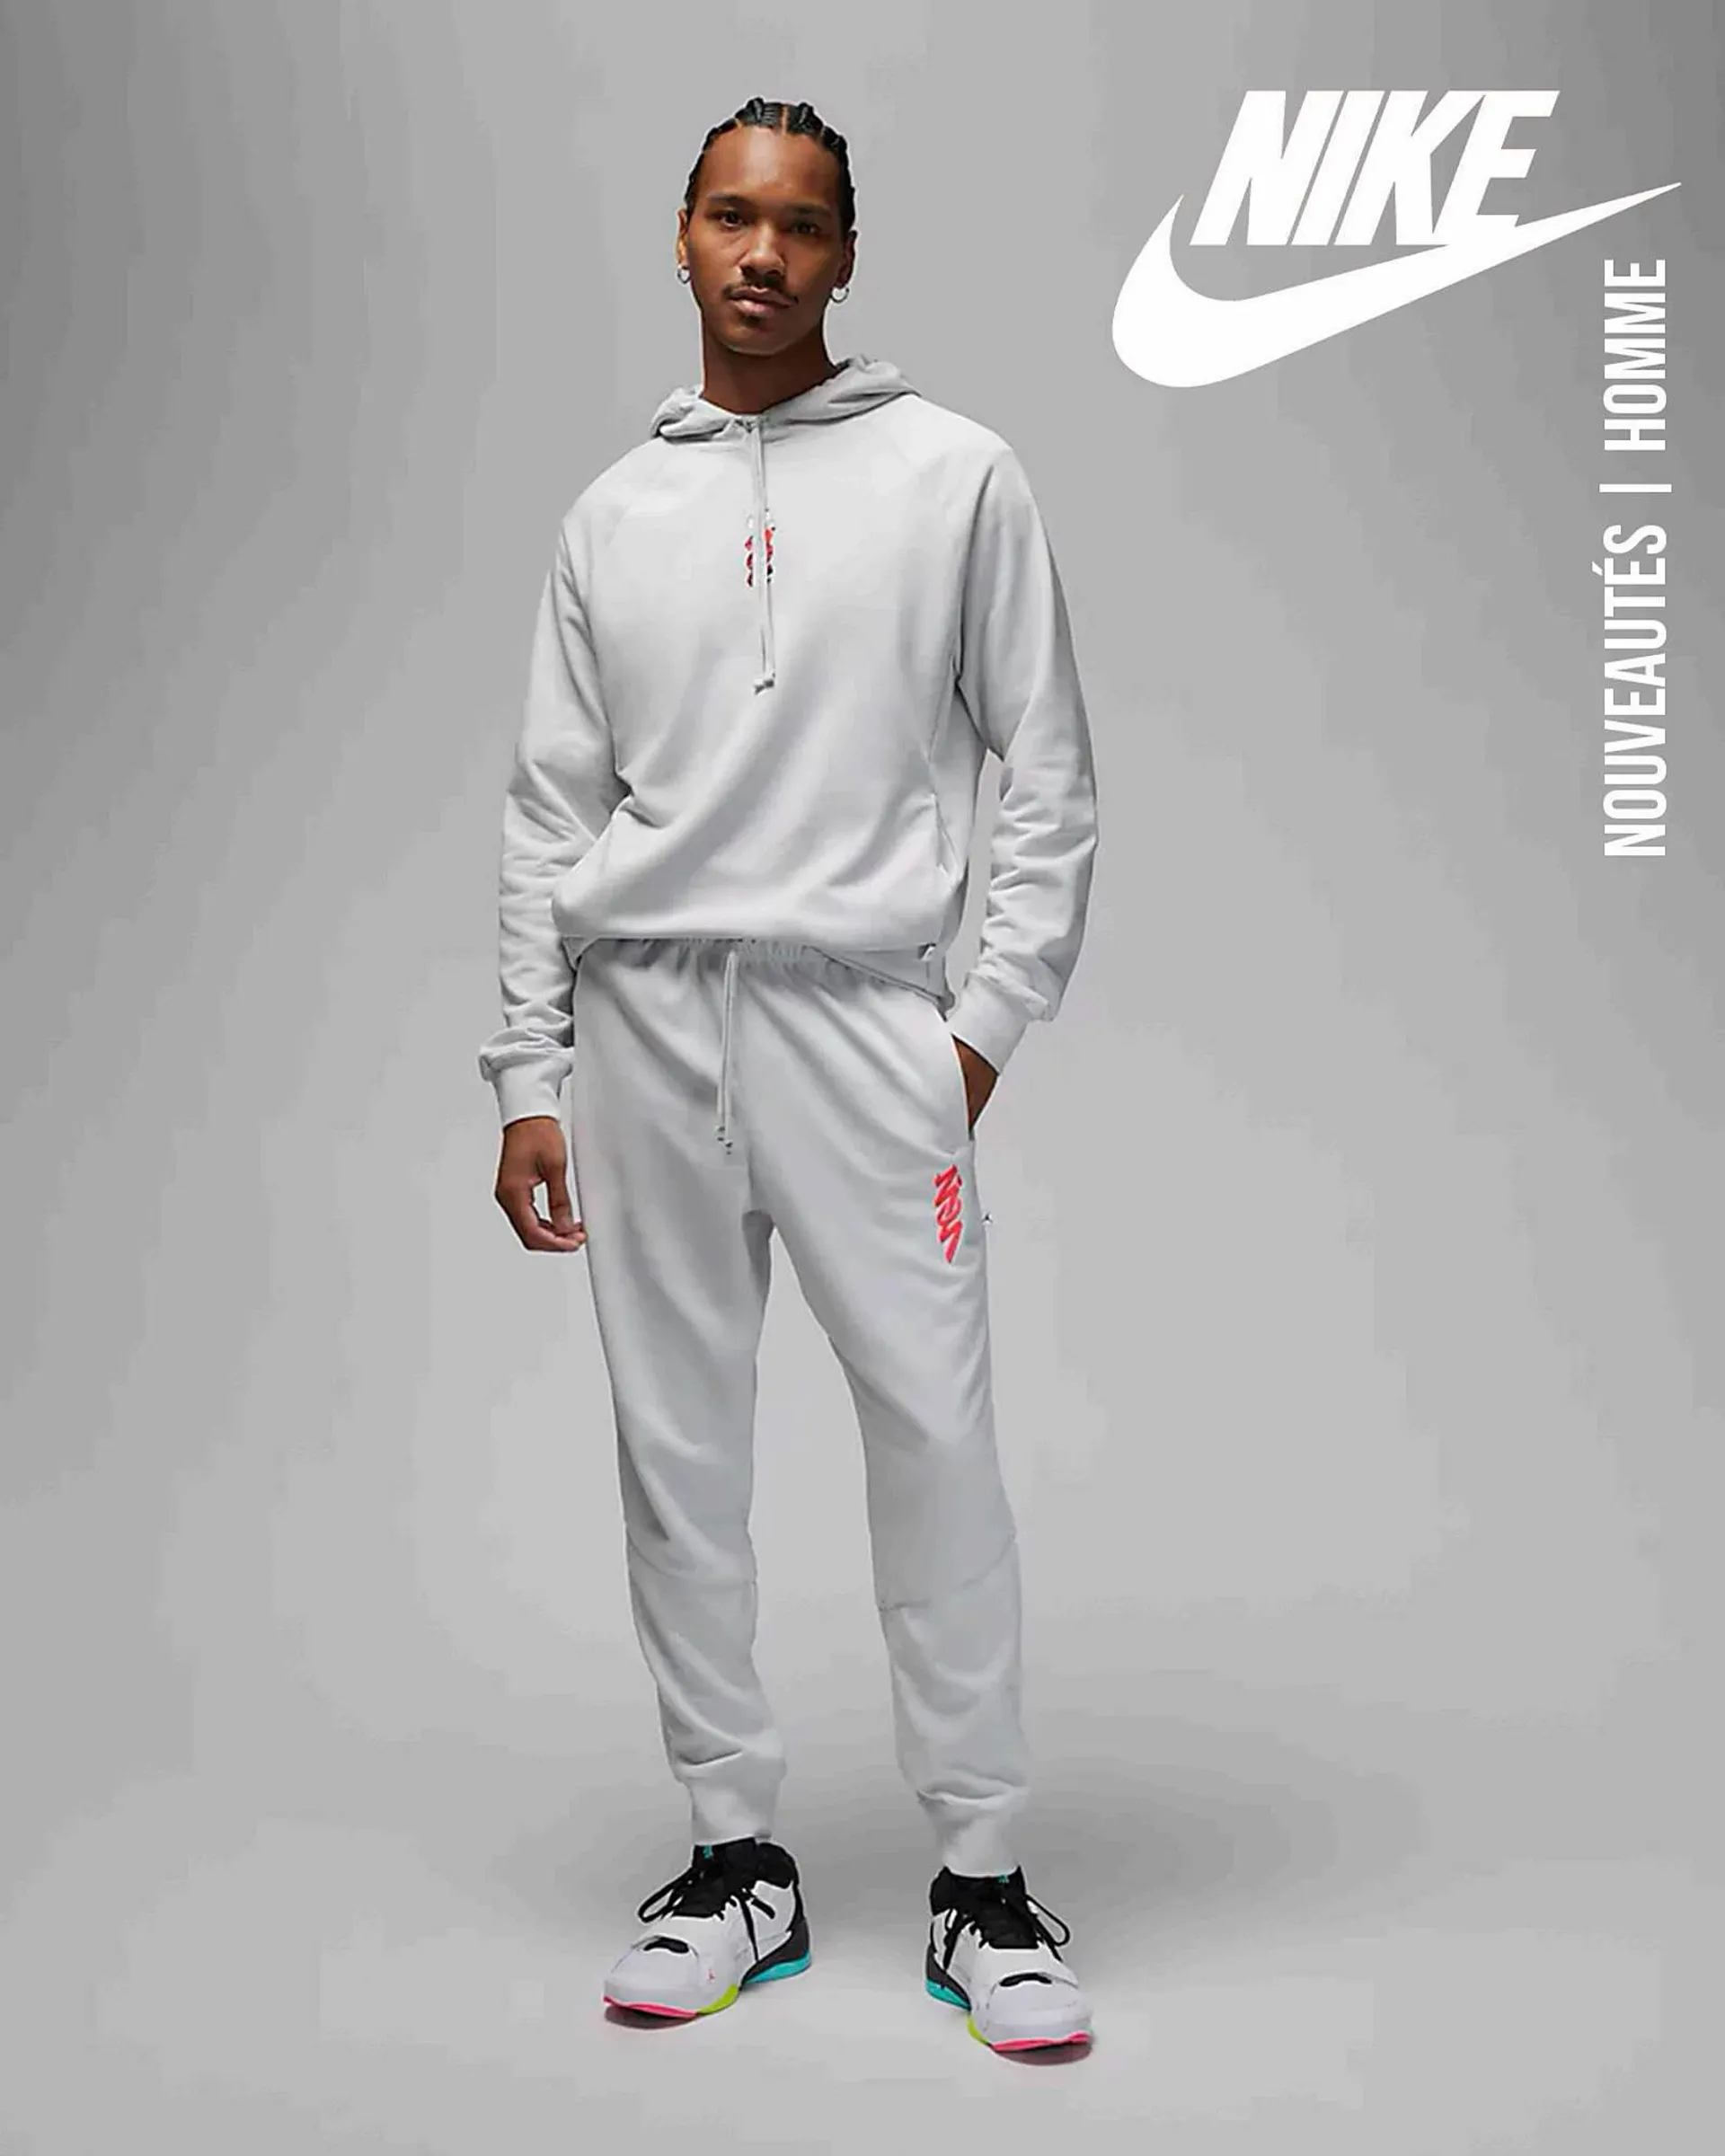 Nike Folder - 1